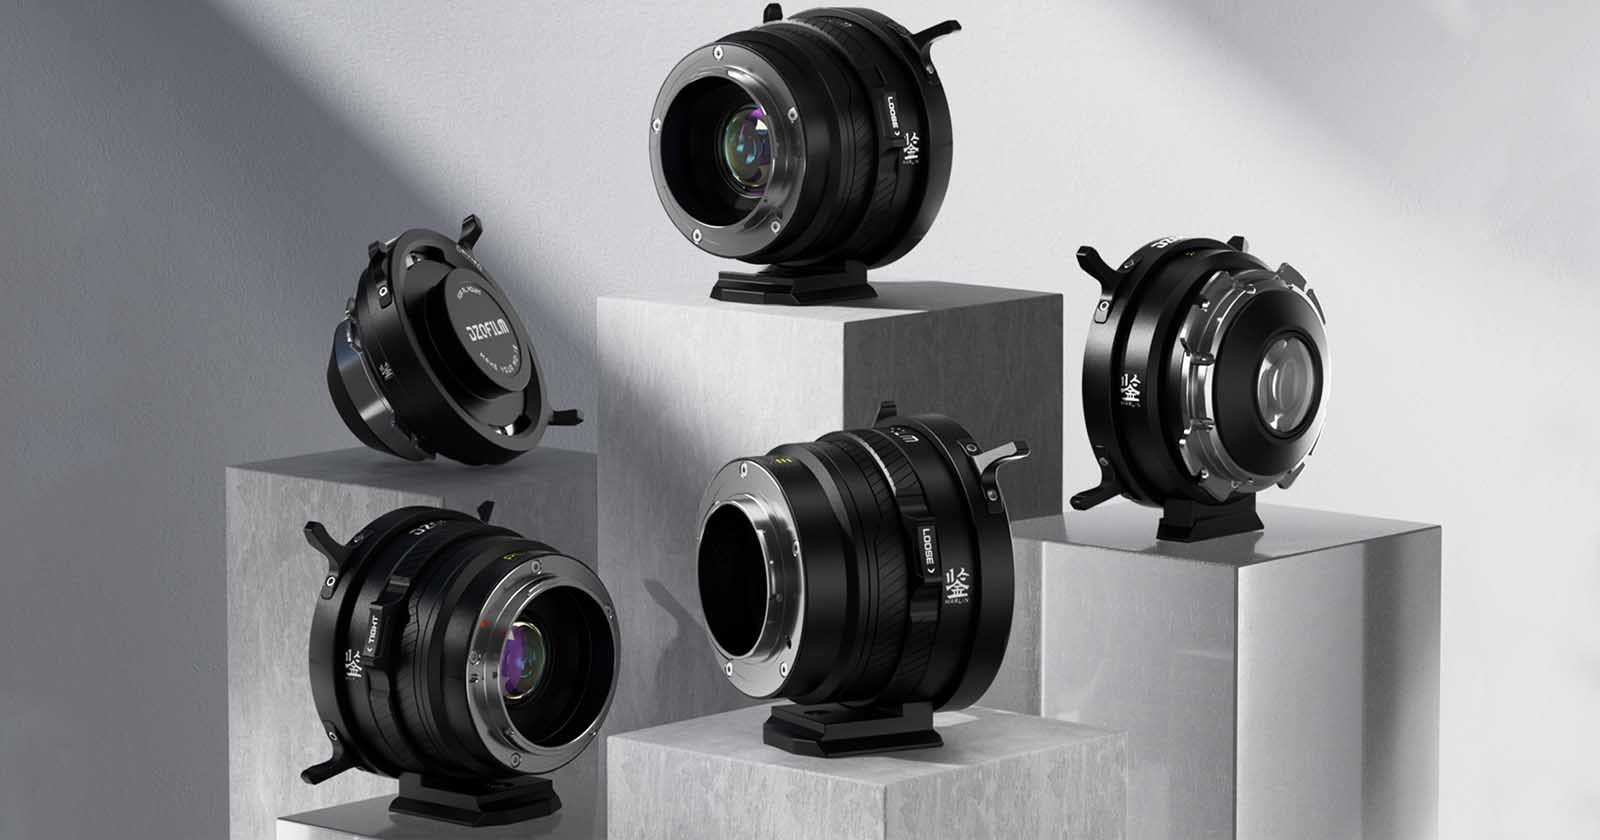  dzofilm marlin expander adapts super35 lenses full frame 